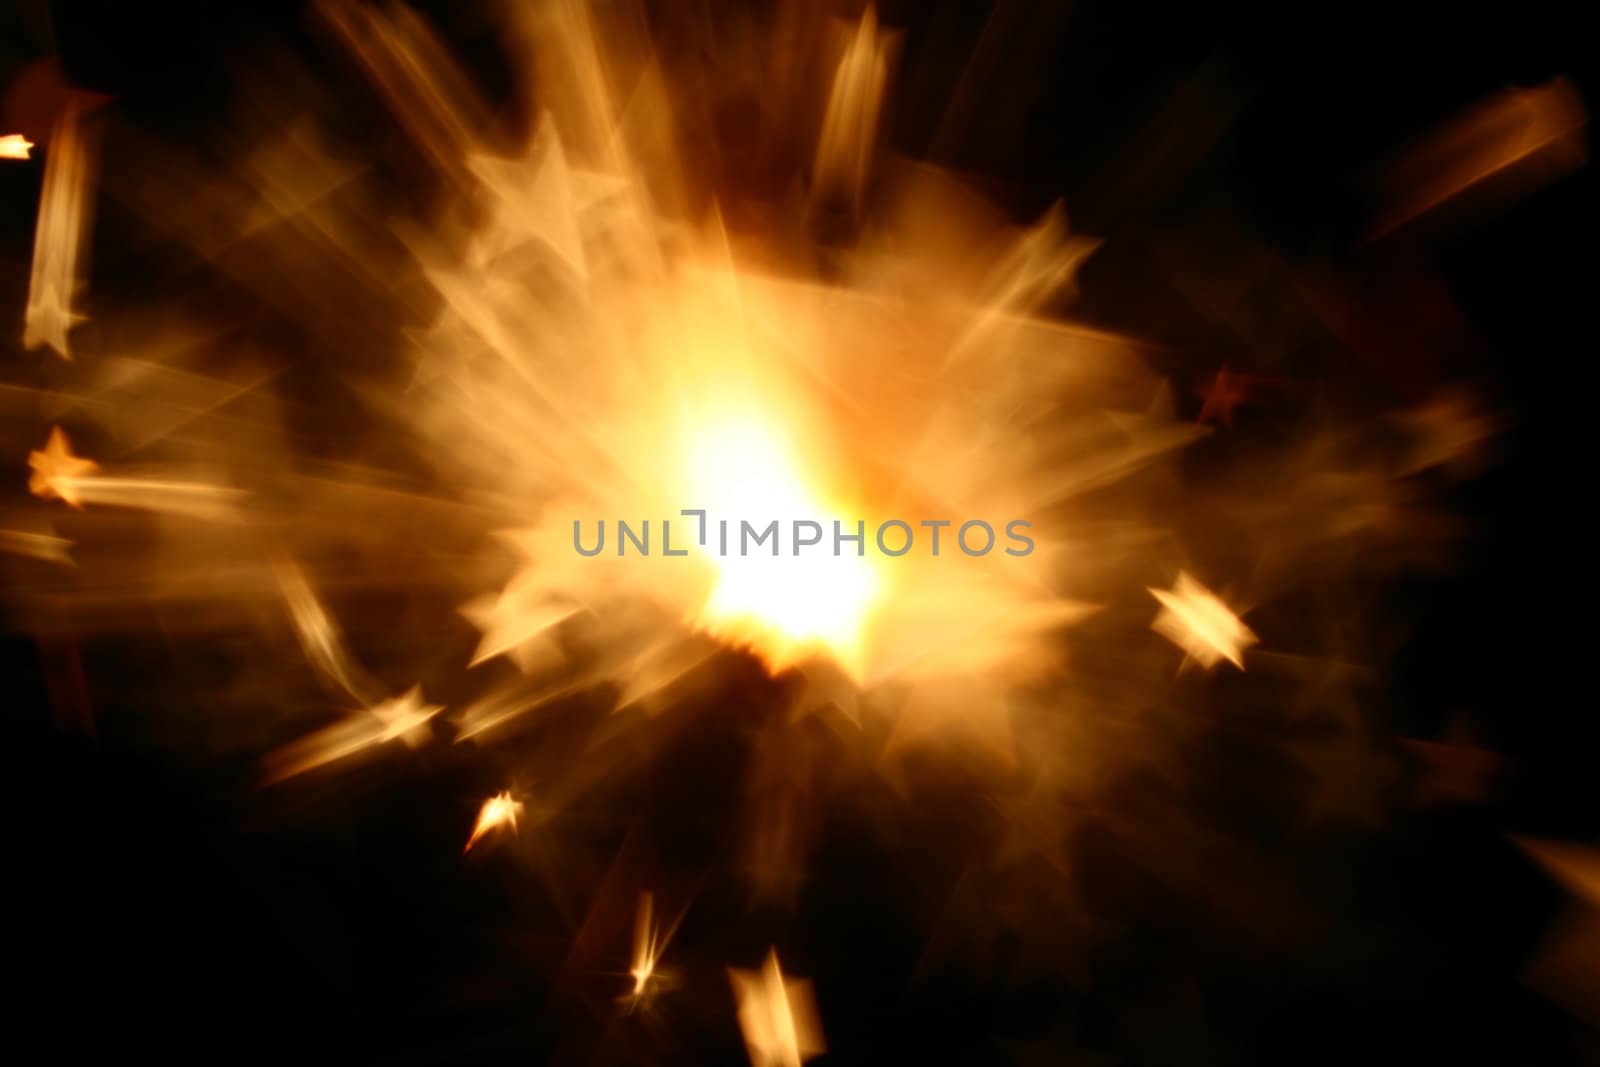 sparkler fire macro background close up